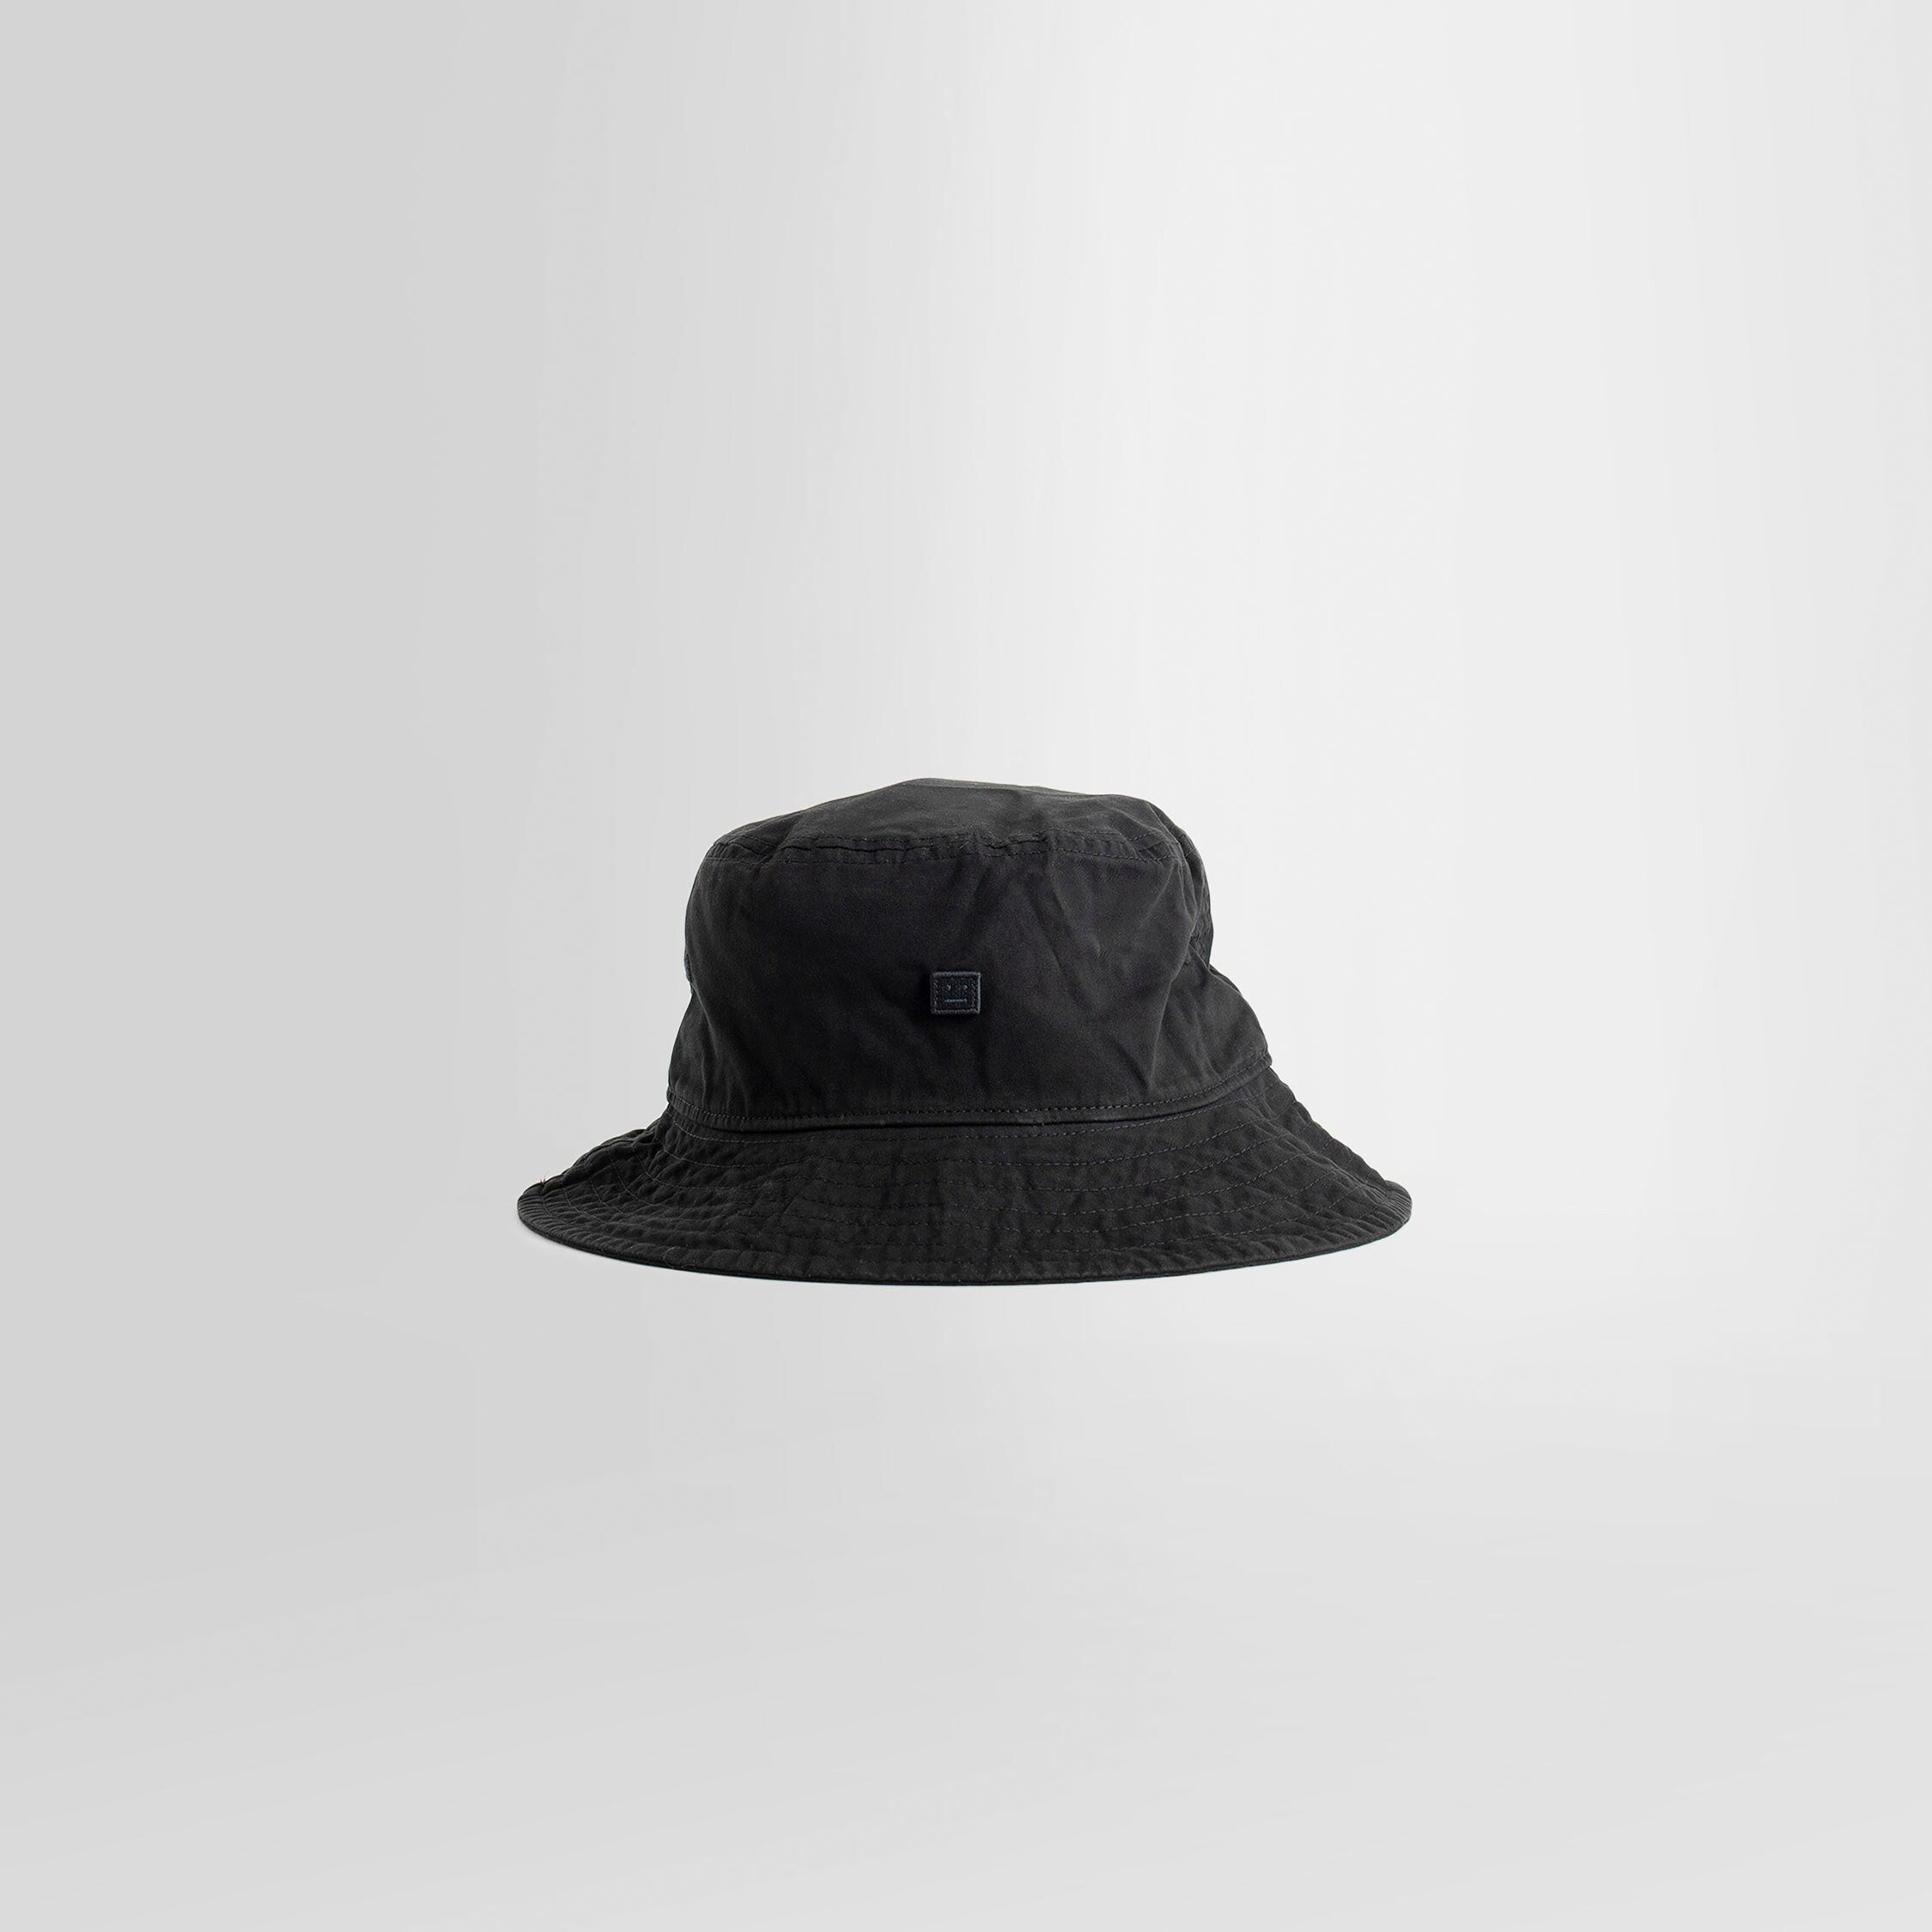 ACNE STUDIOS MAN BLACK HATS